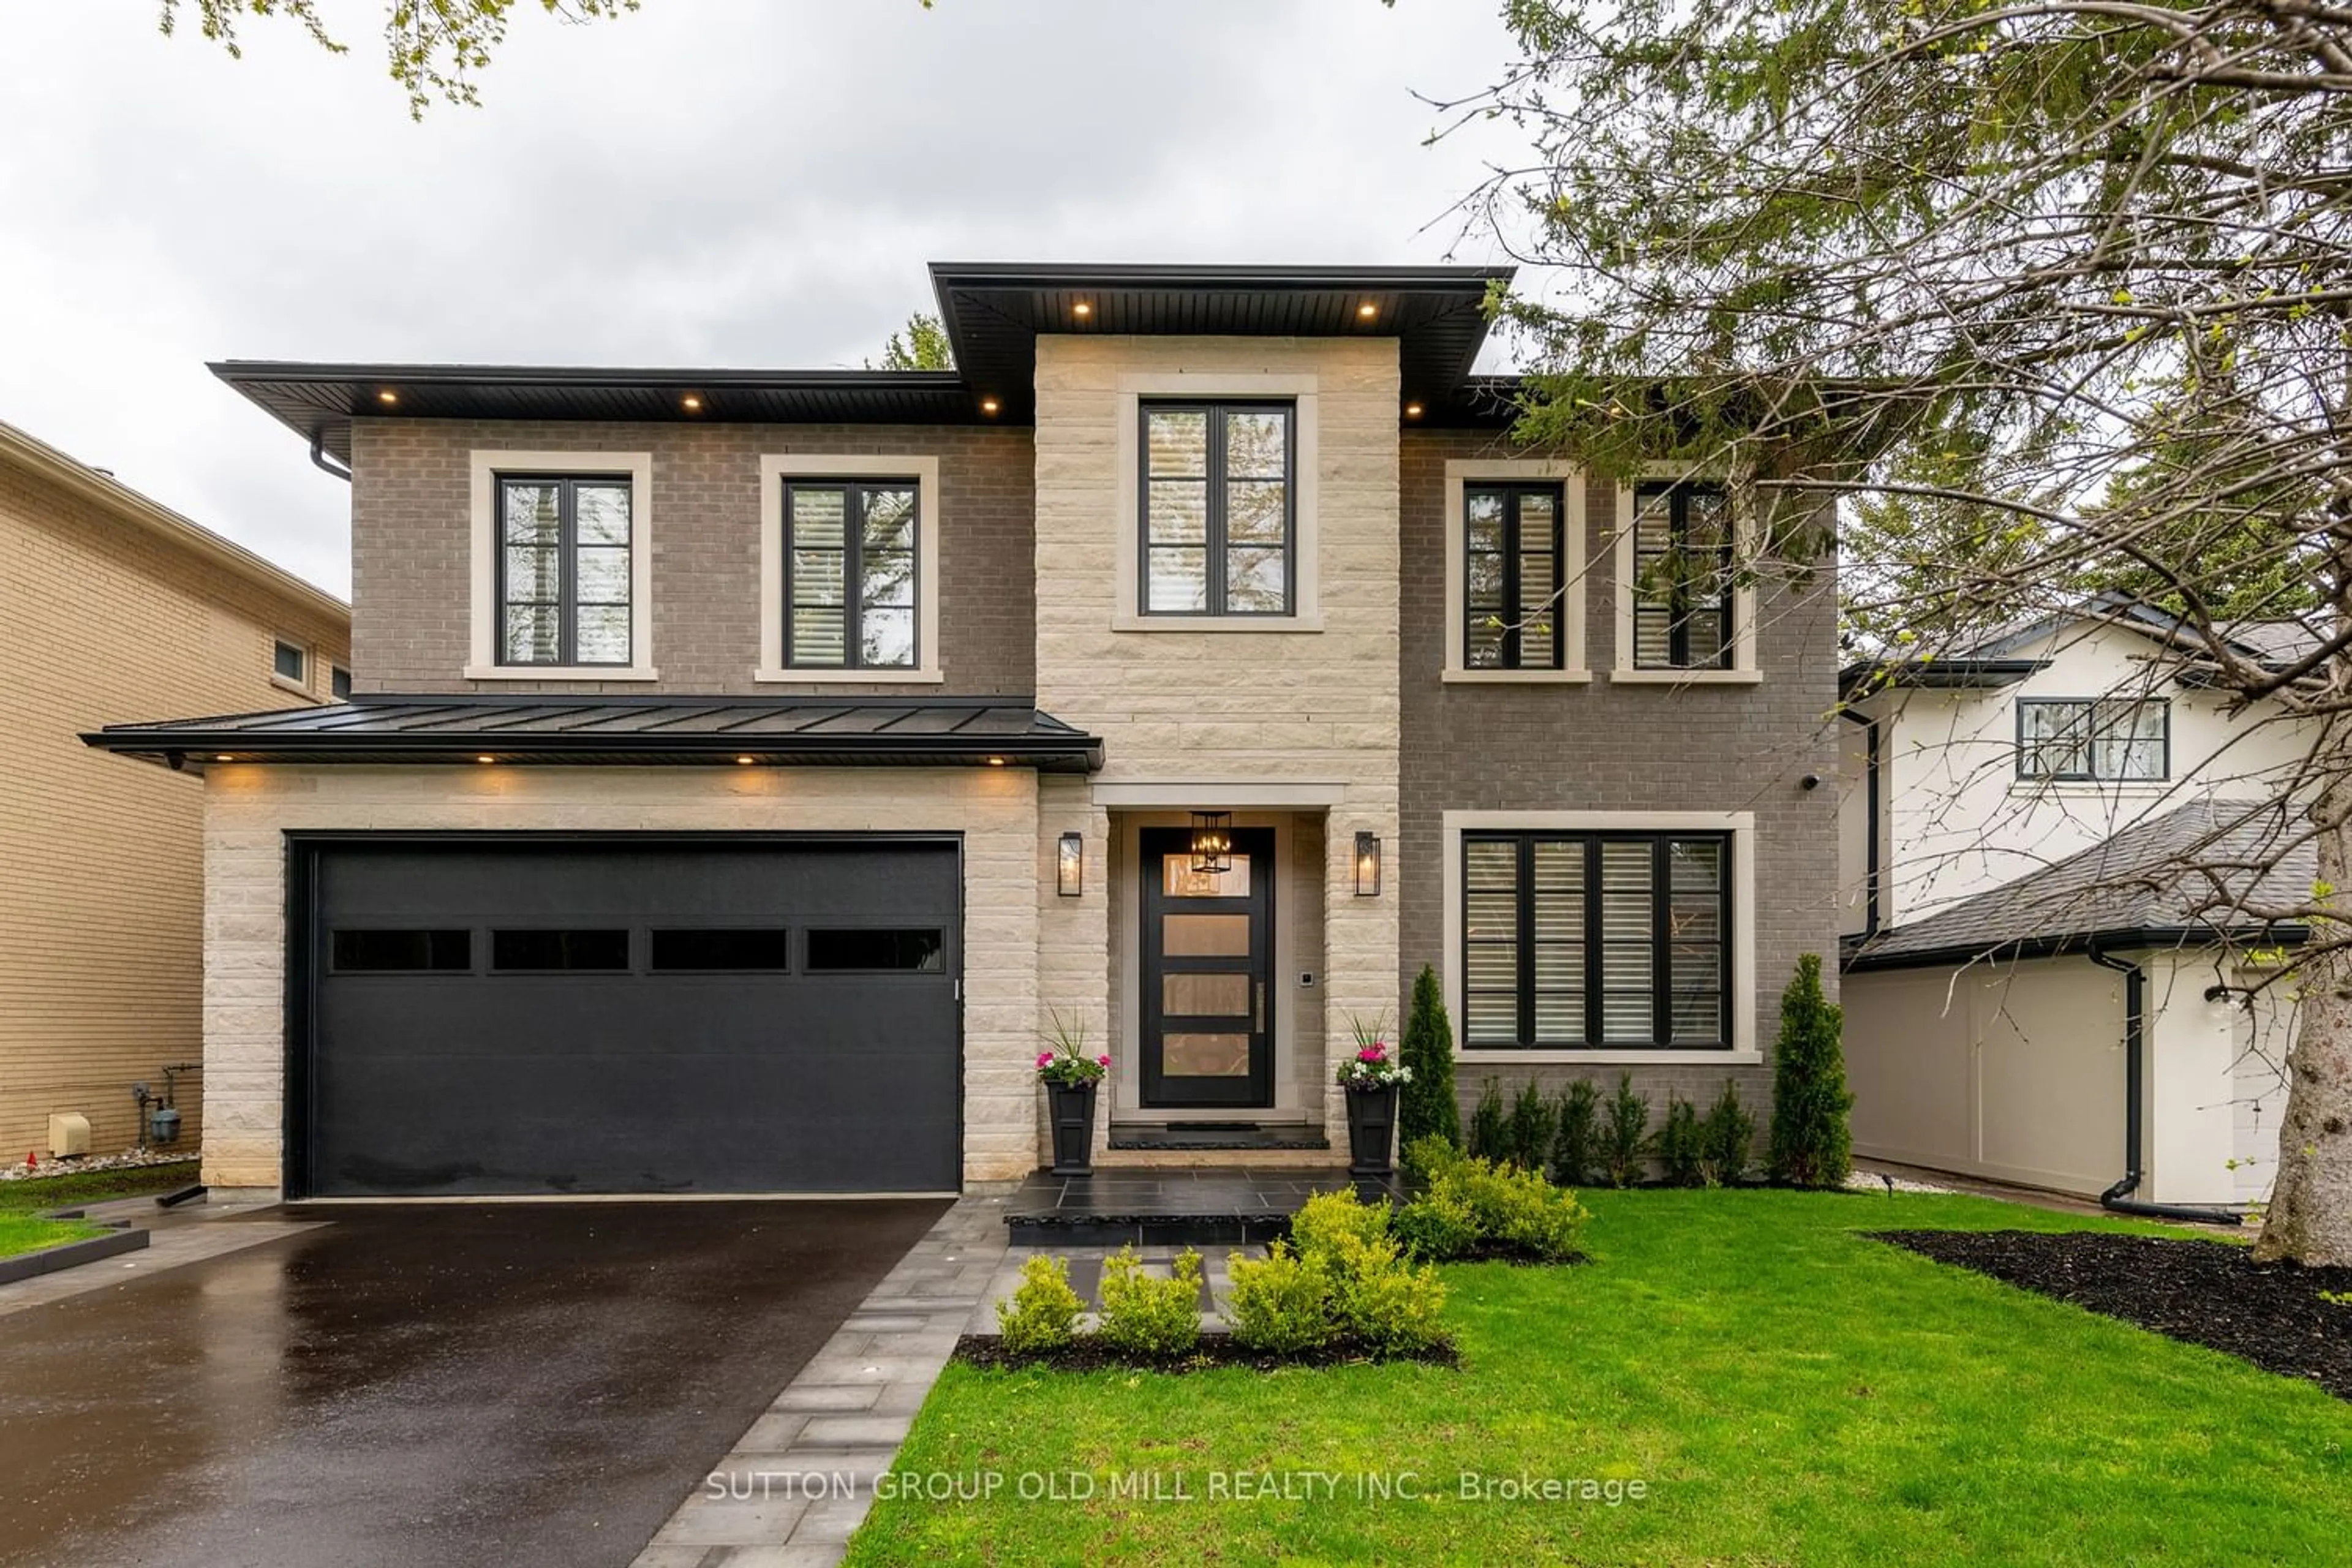 Home with brick exterior material for 24 Colwood Rd, Toronto Ontario M9A 4E4